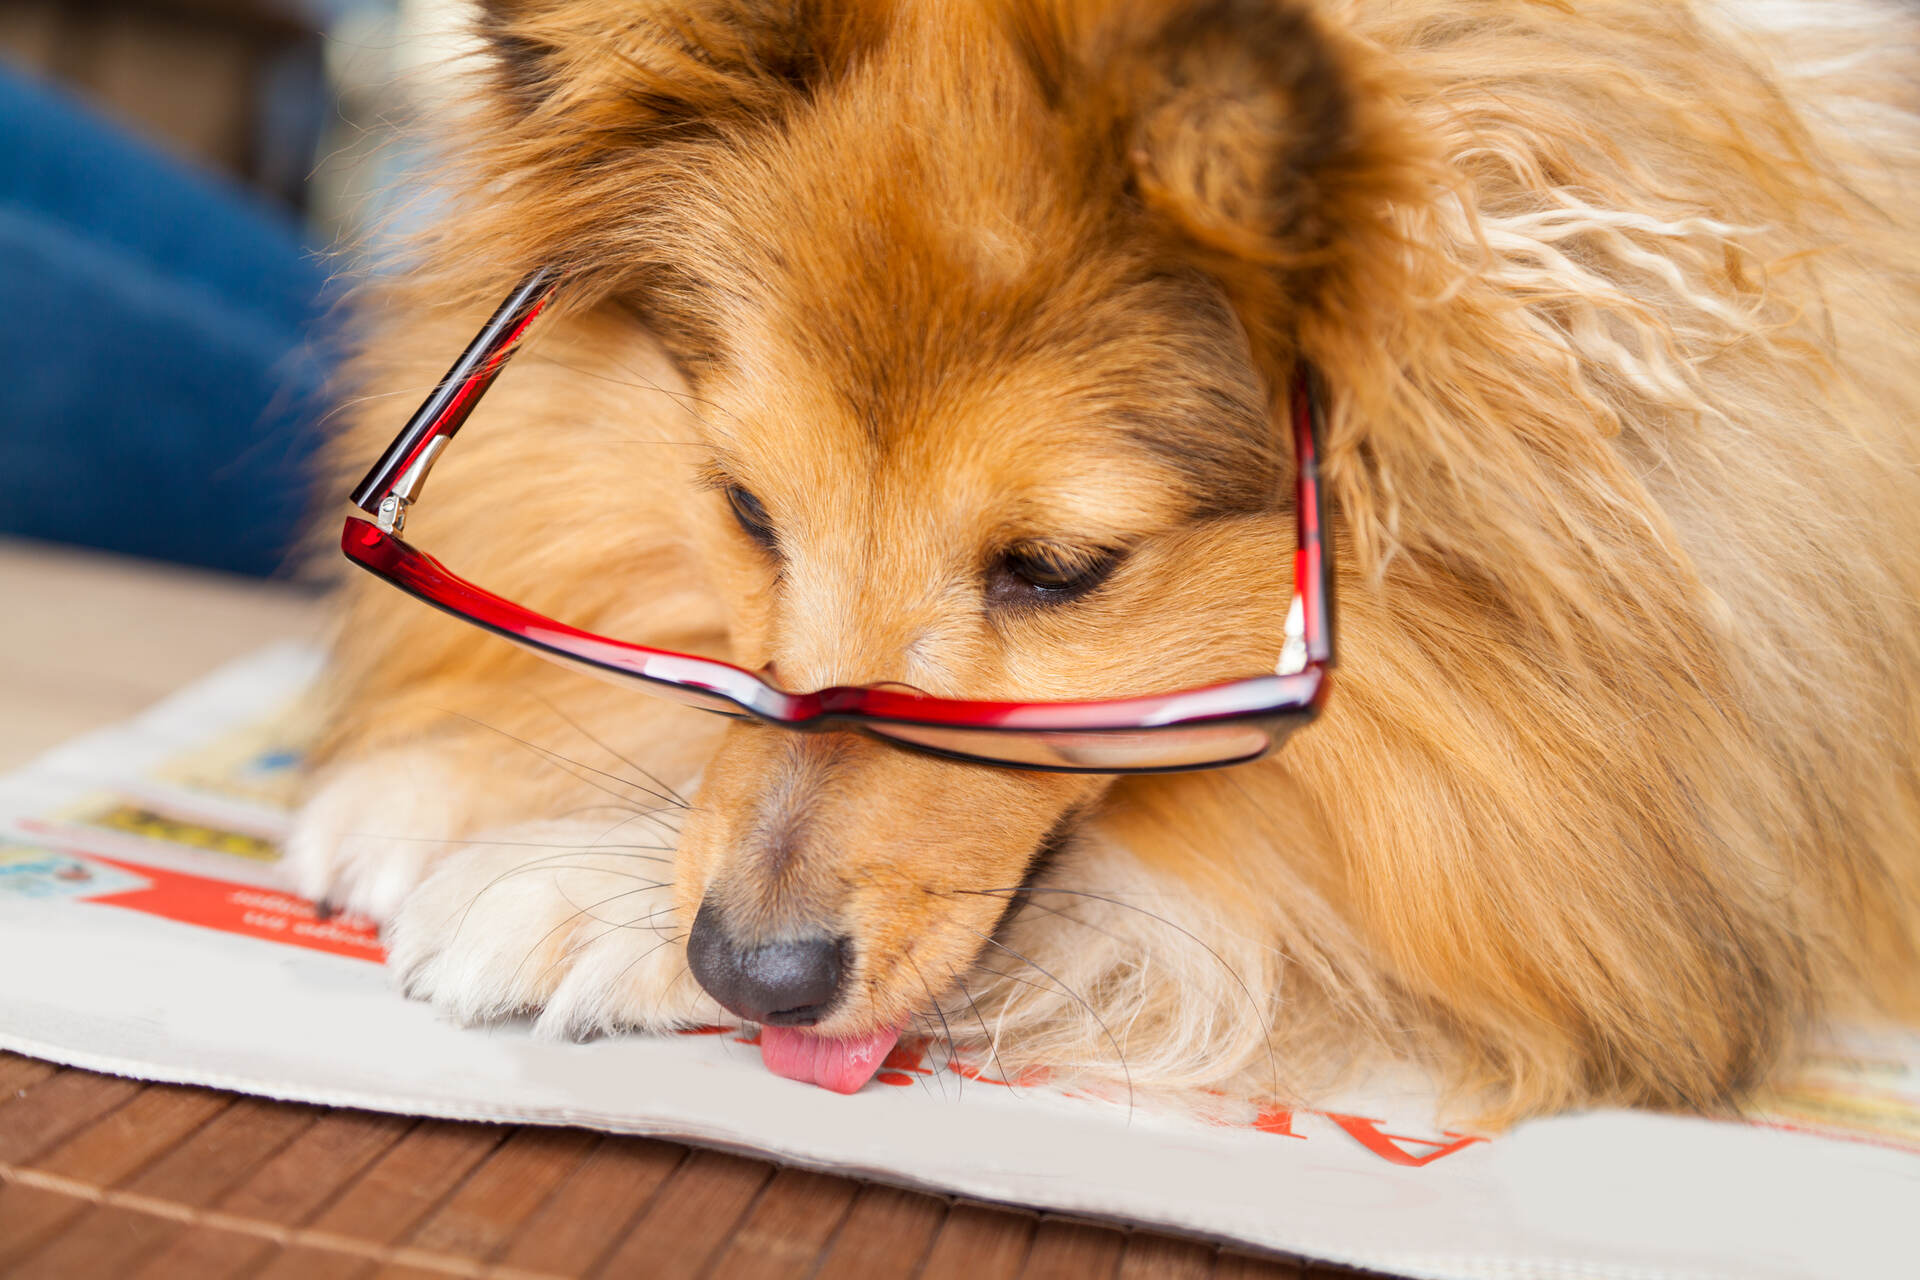 A Sheltie wearing eye glasses reading a newspaper